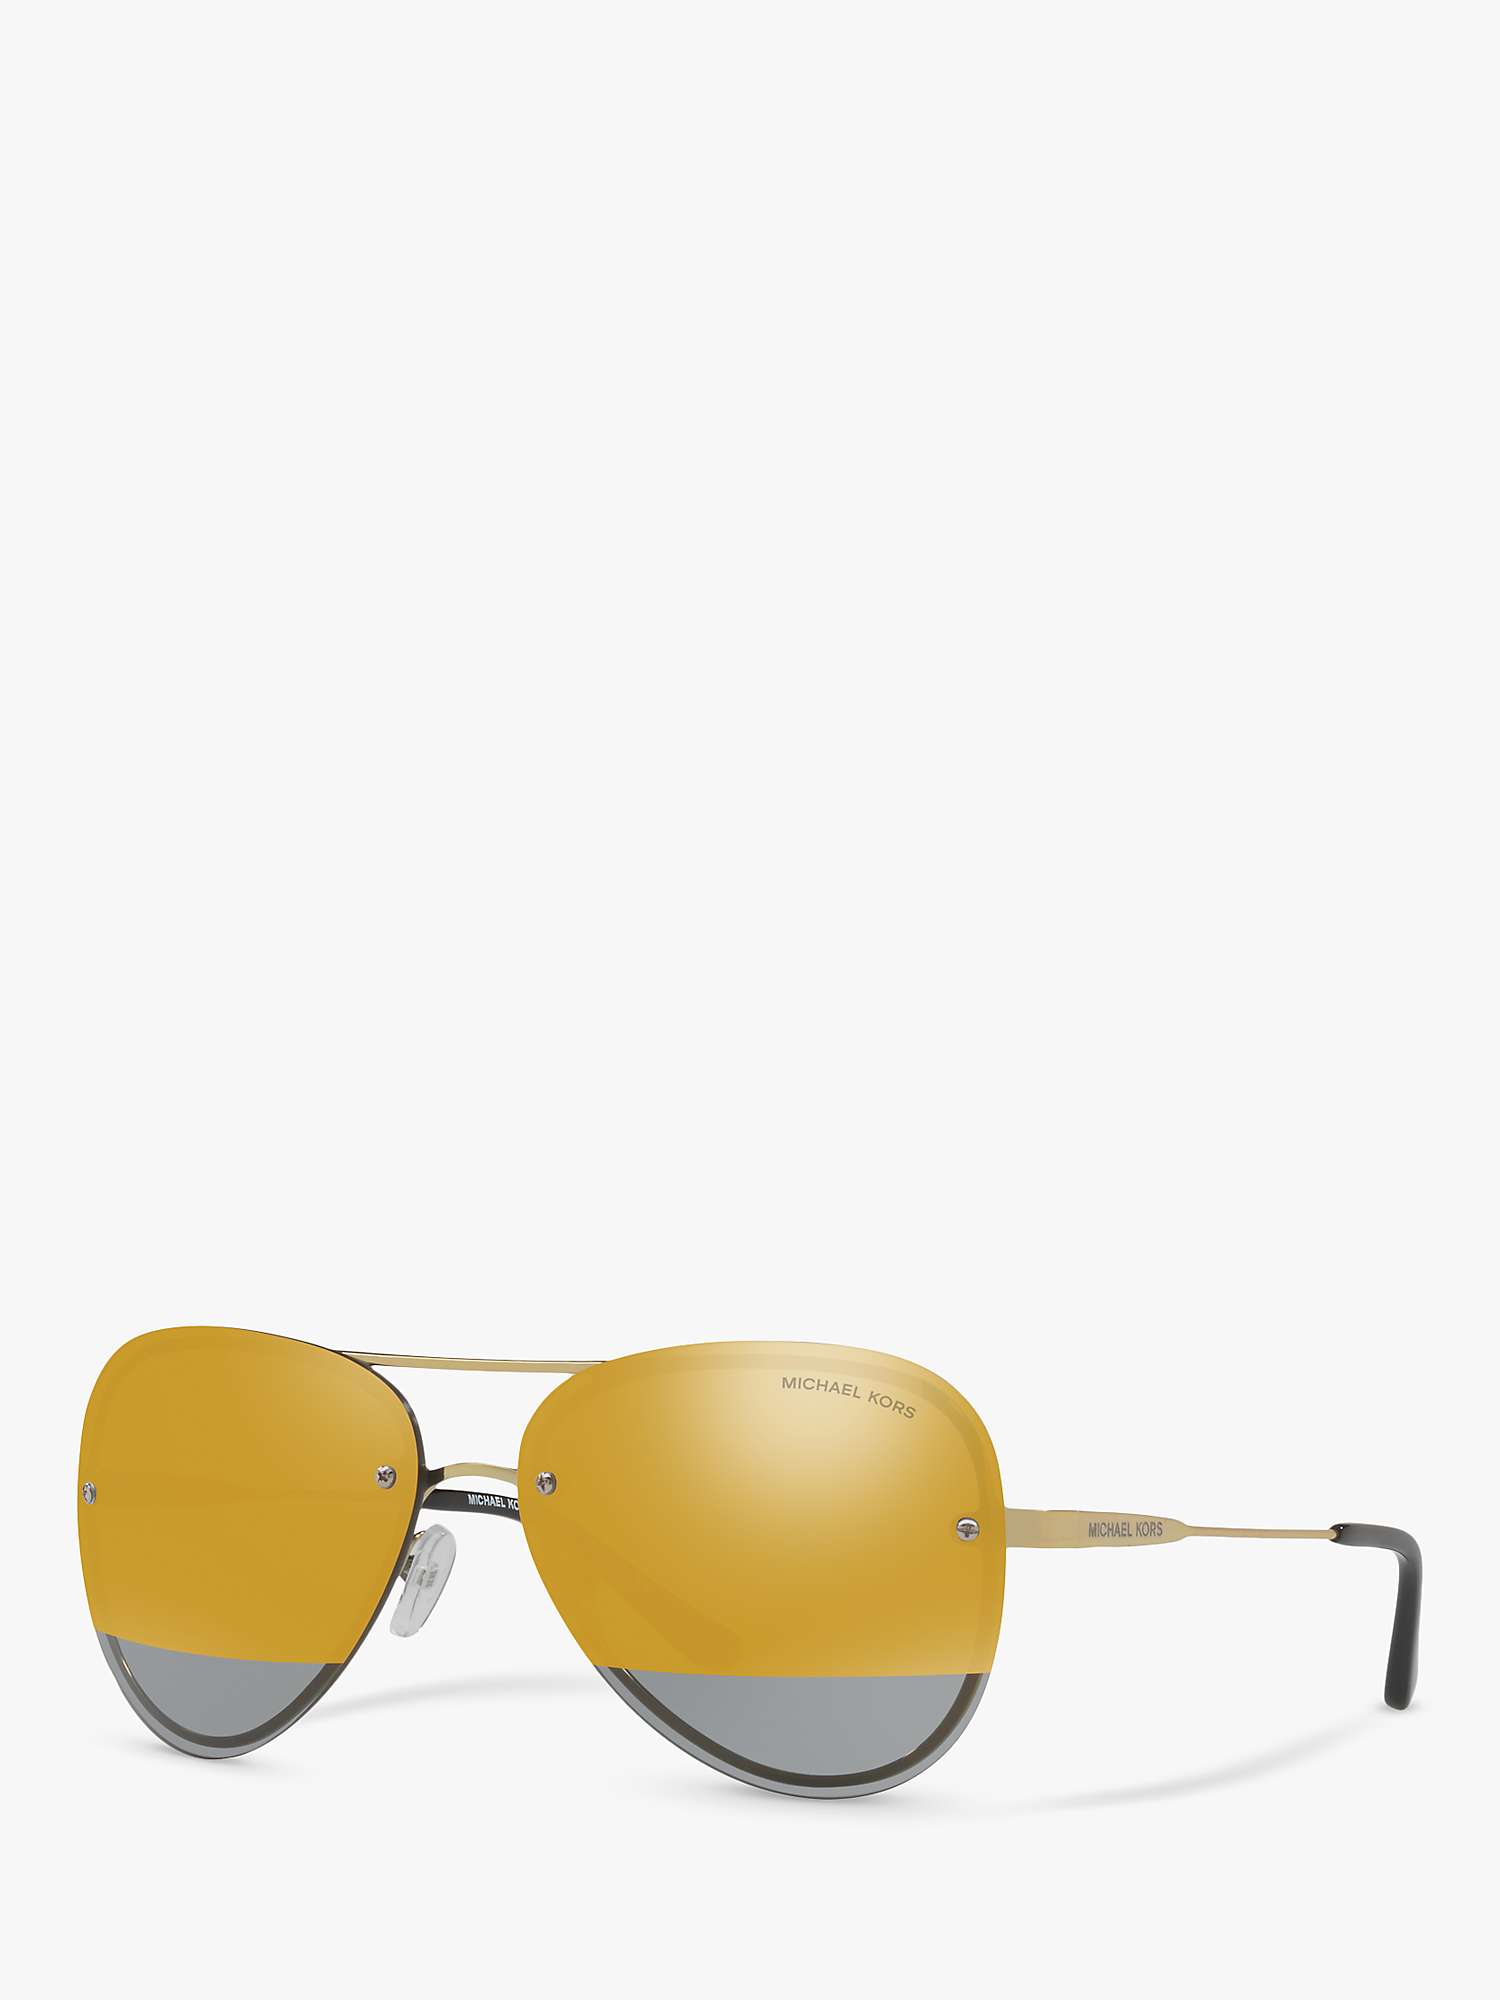 Buy Michael Kors MK1026 Women's La Jolla Aviator Sunglasses, Pale Gold/Grey Online at johnlewis.com